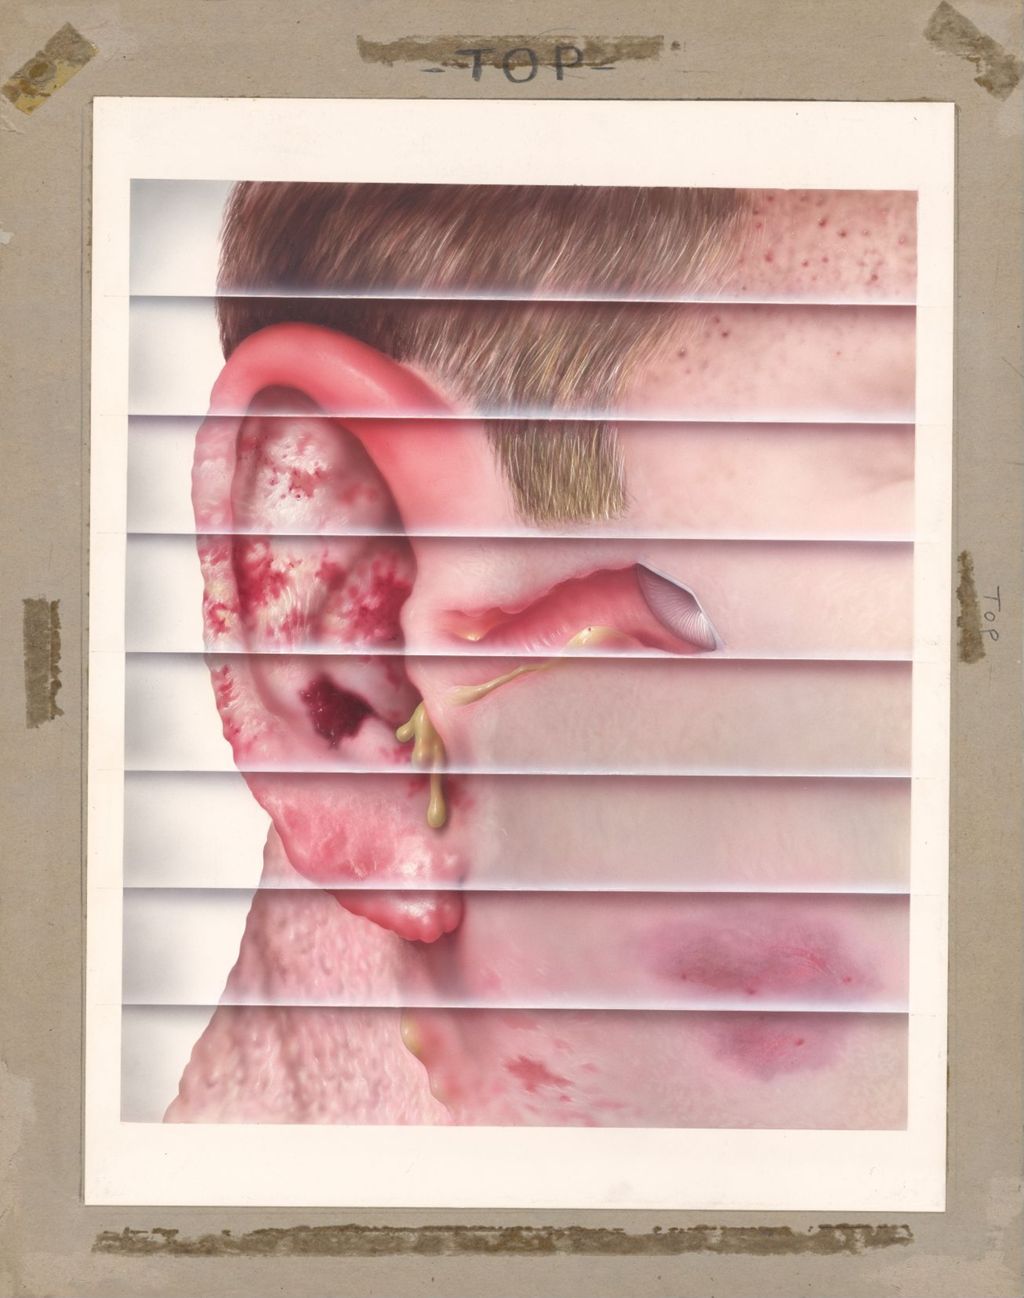 Miniature of Composite of Ear Diseases (External)